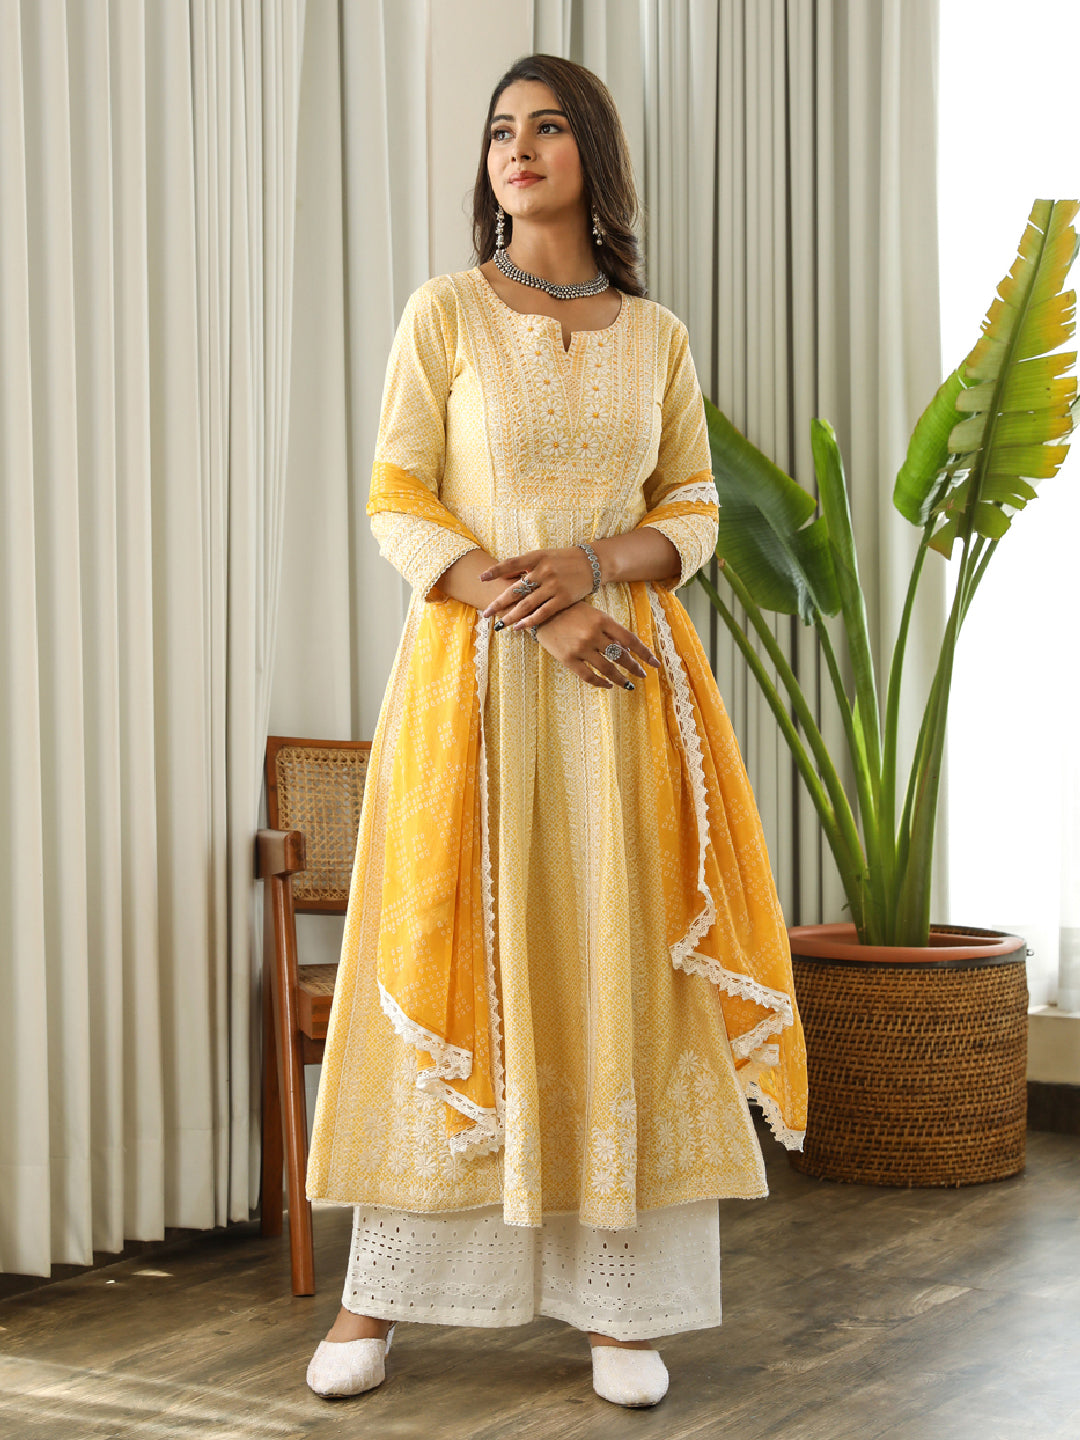 Nehamta: Designer Ethnic Wear for Women | Finest Collections in India